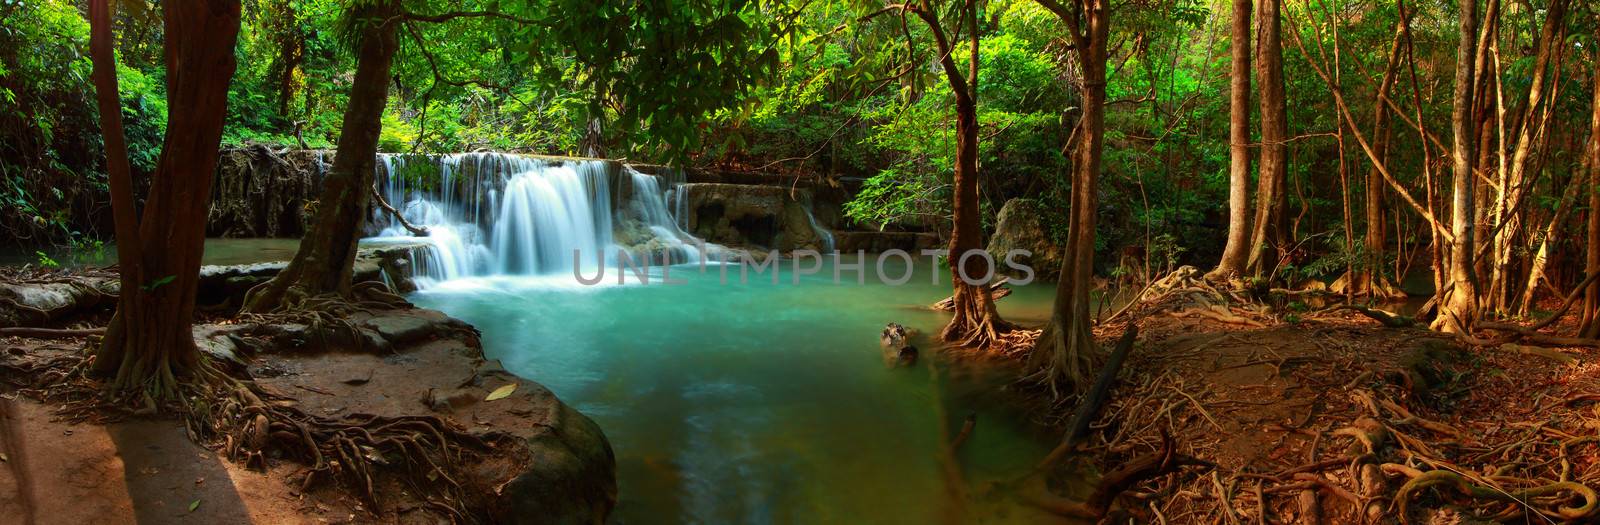 Huay mae kamin waterfall in Kanchanaburi, Thailand, Panorama